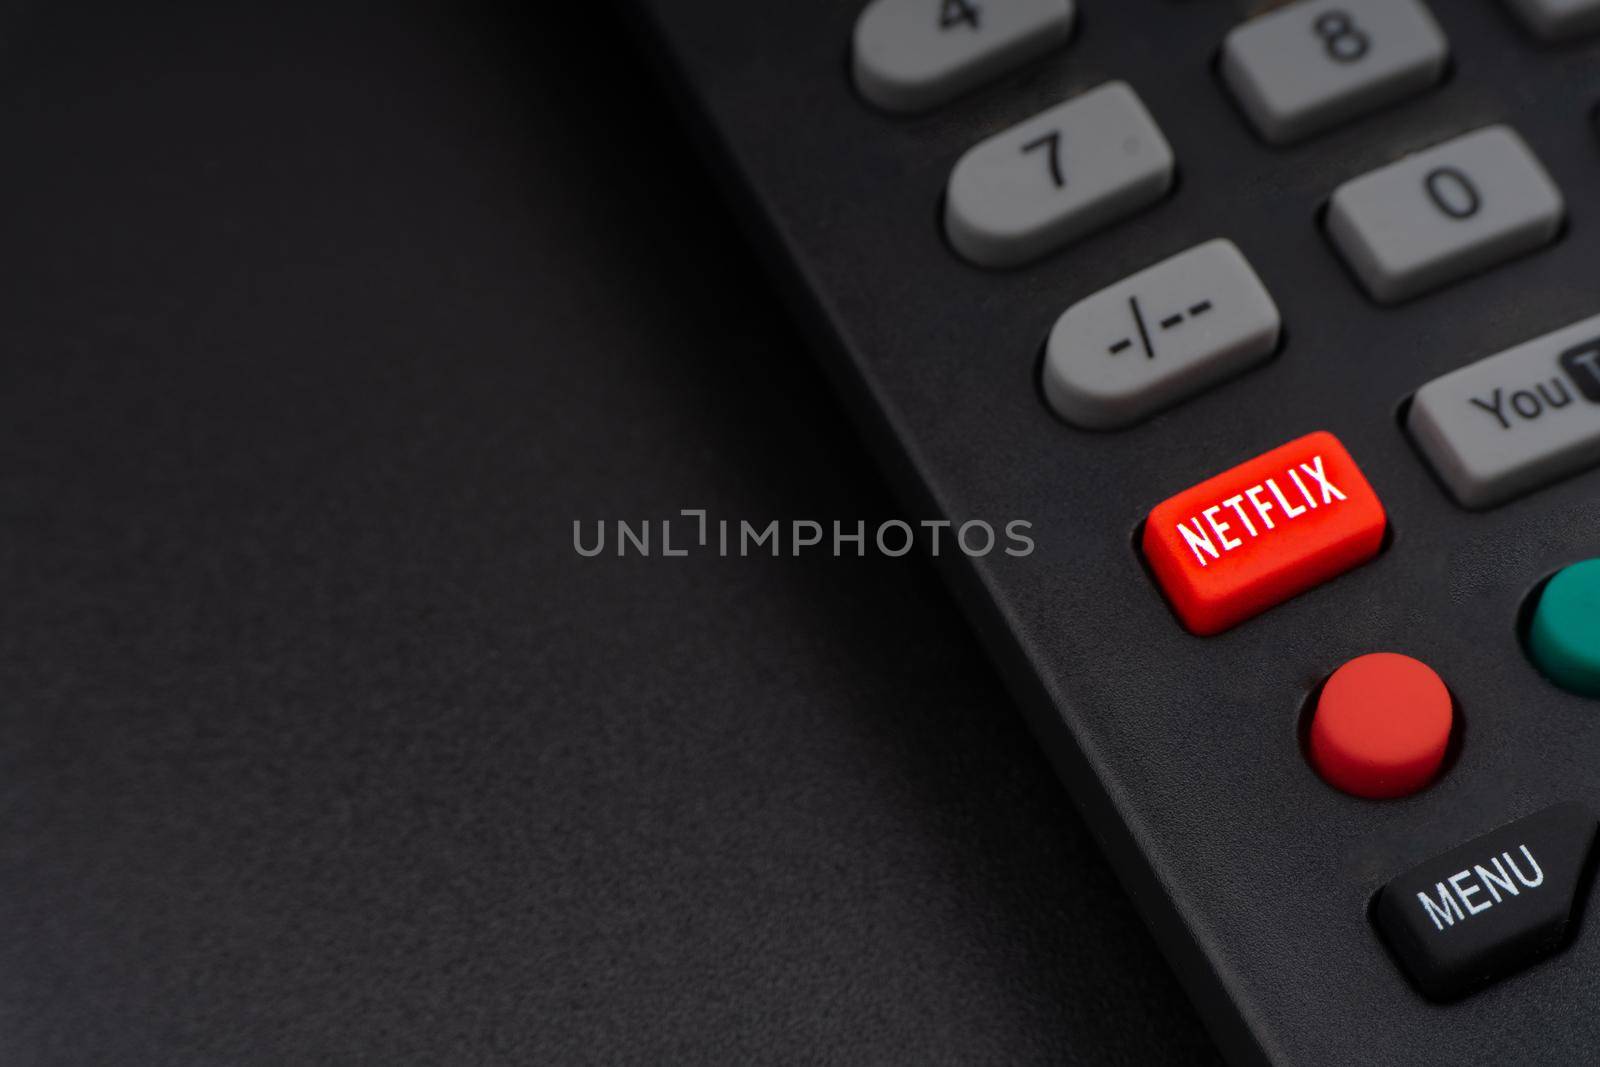 Kuala Lumpur, Malaysia : May 1, 2021 : NETFLIX television remote controller on black background